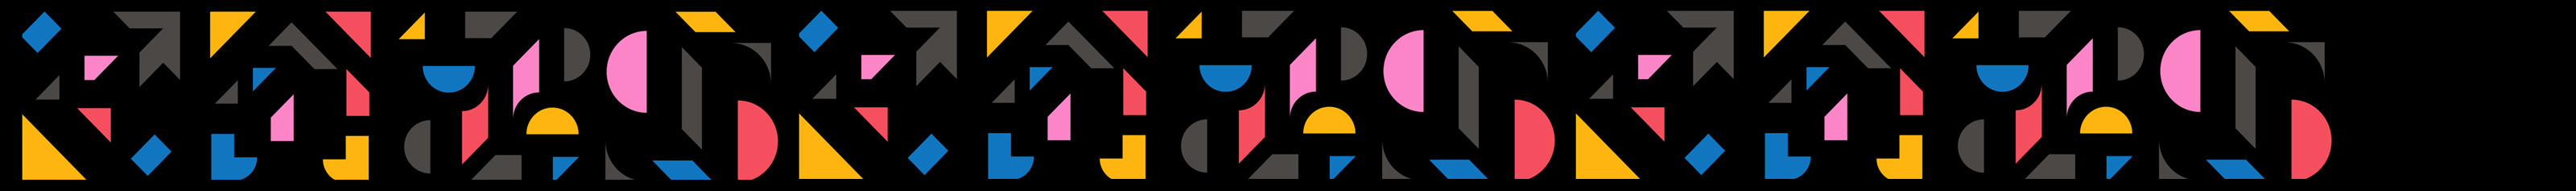 DAAPworks 2021's profile banner